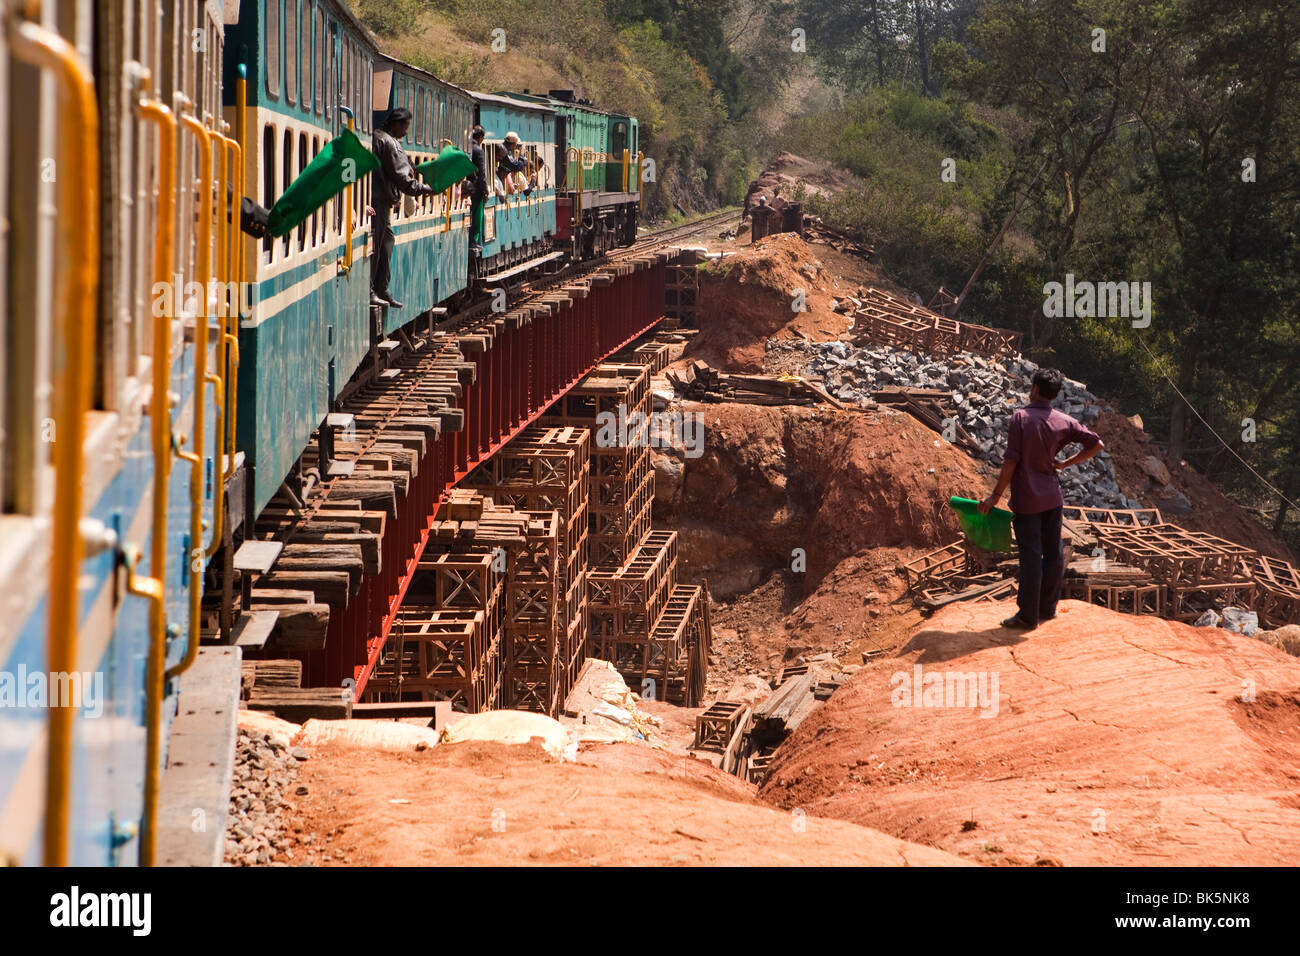 India, Tamil Nadu, Udhagamandalam (Ooty), Nilgiri Mountain Railway rack train crossing temporary bridge over damaged track Stock Photo